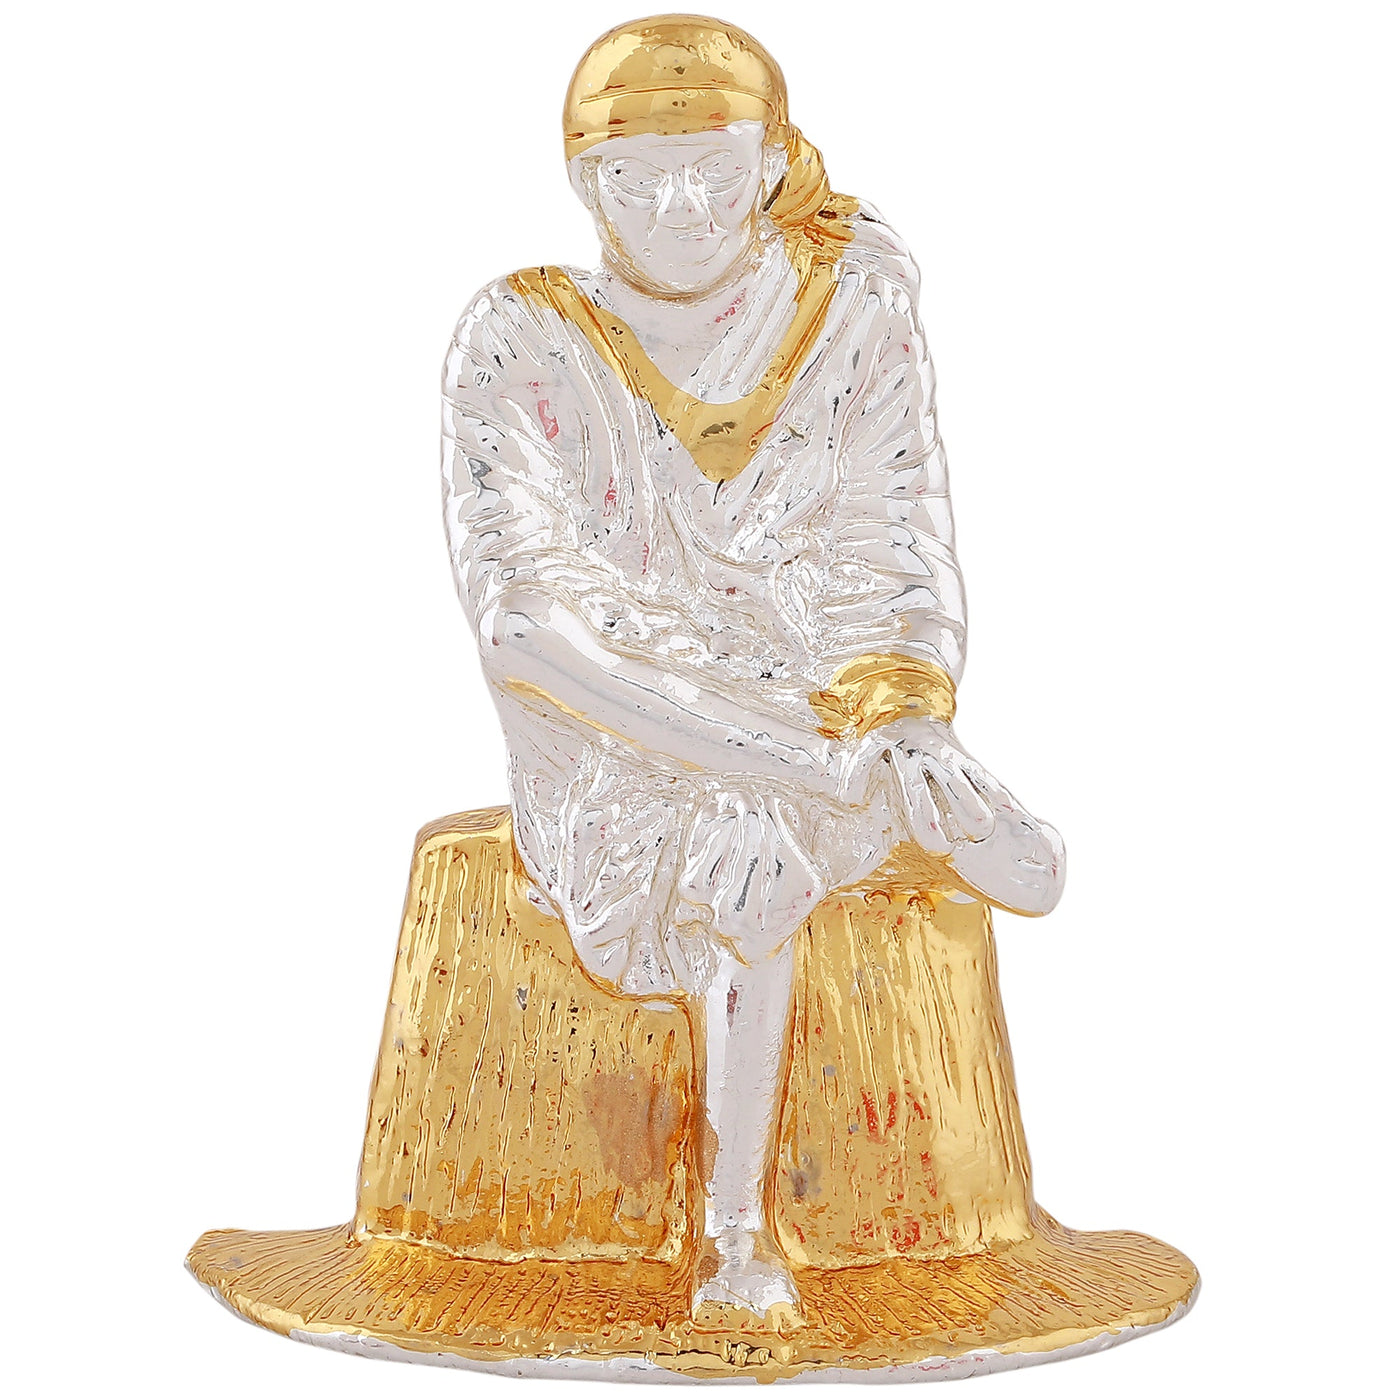 Estele Gold & Rhodium Plated Divine Lord Sai Baba Idol